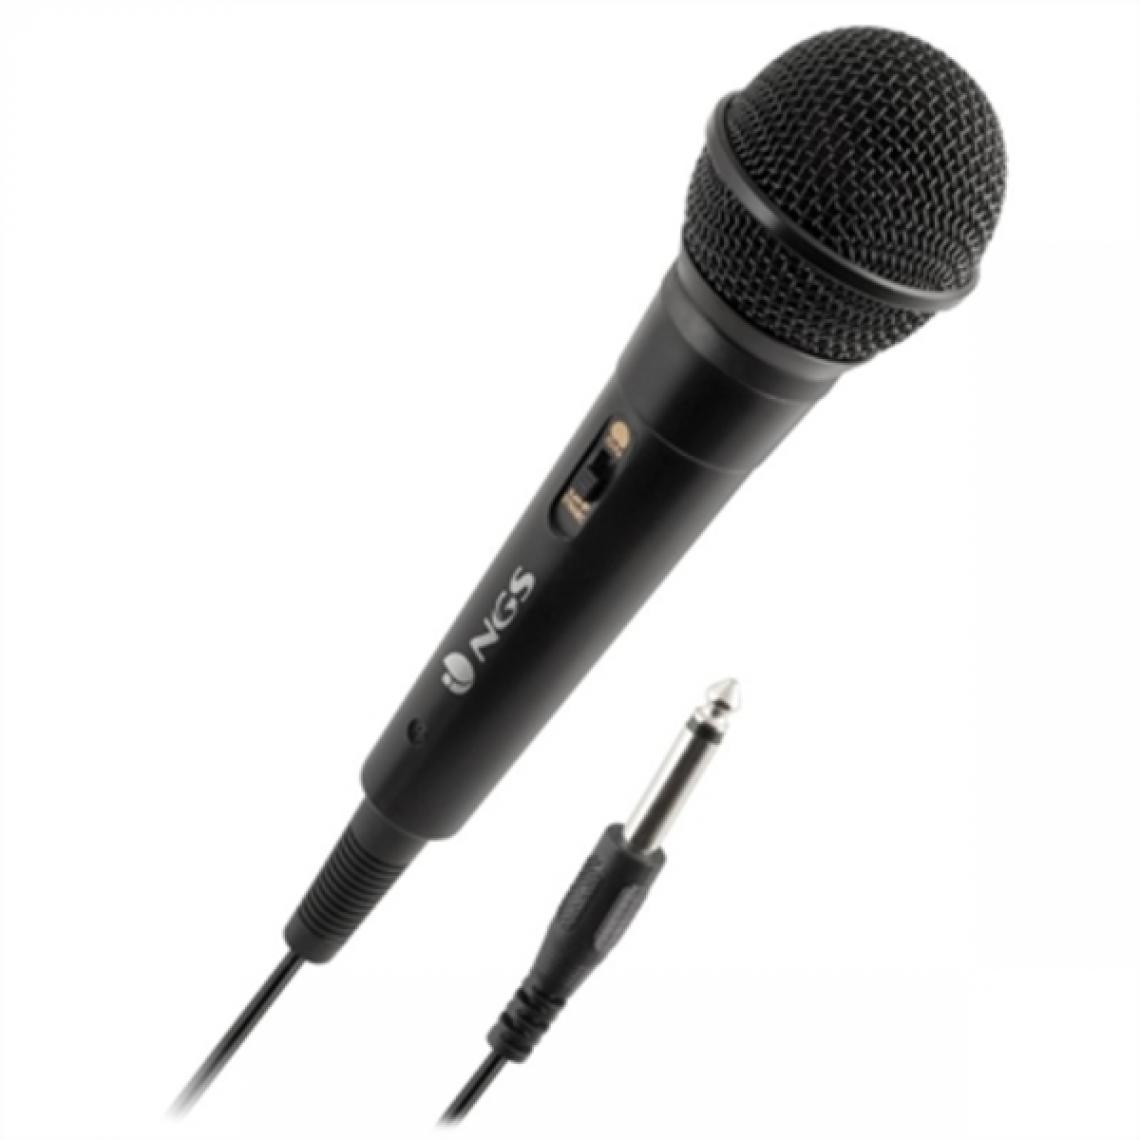 Ngs - Microphone Karaoké NGS Singer Fire Noir (6.3 mm) - Microphone PC